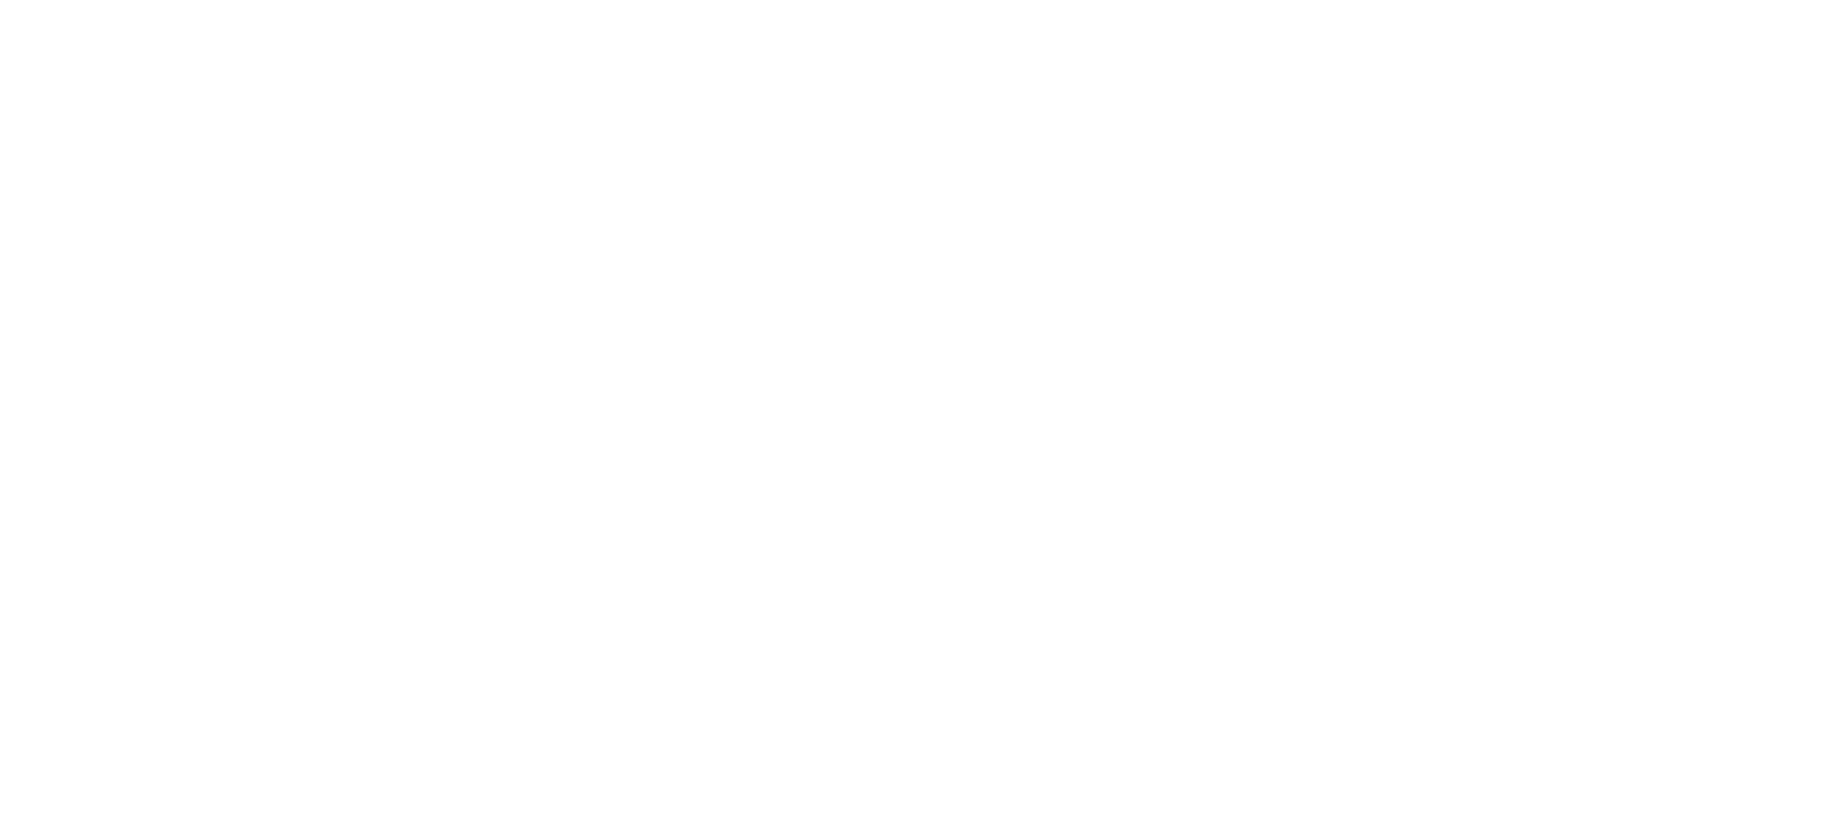 Cash For Junk Cars America